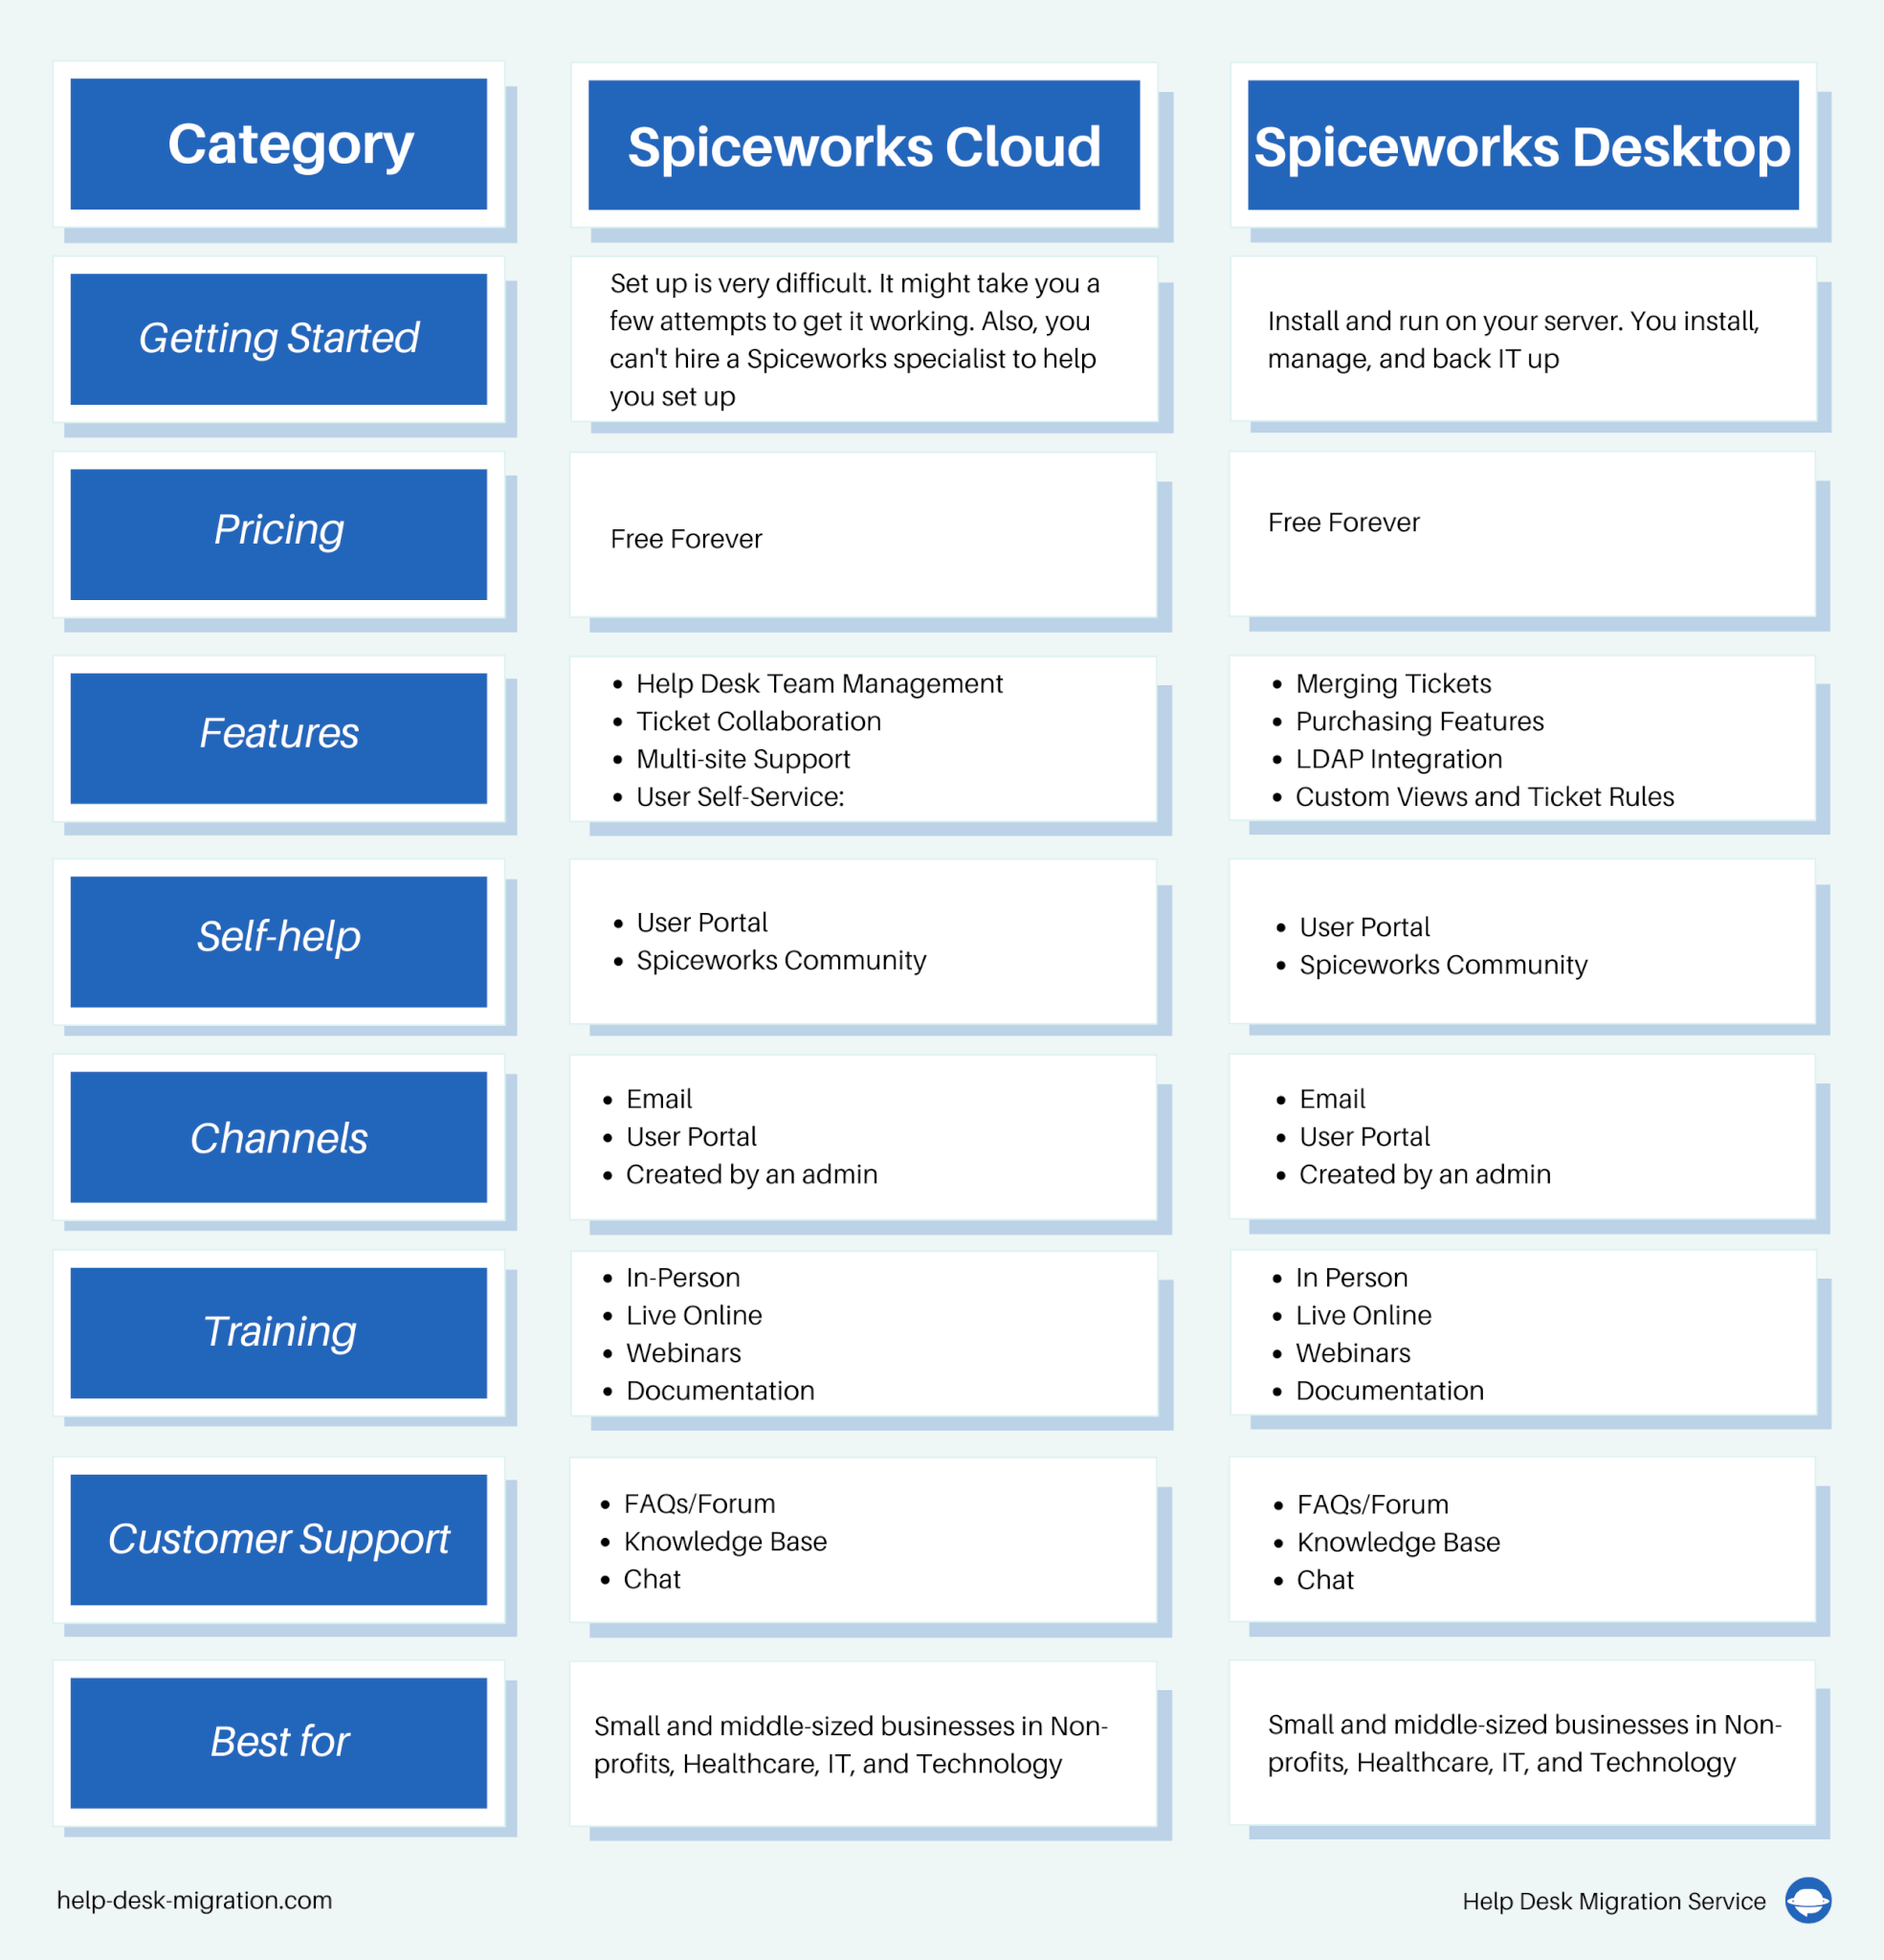 Spiceworks Desktop vs Spiceworks Cloud